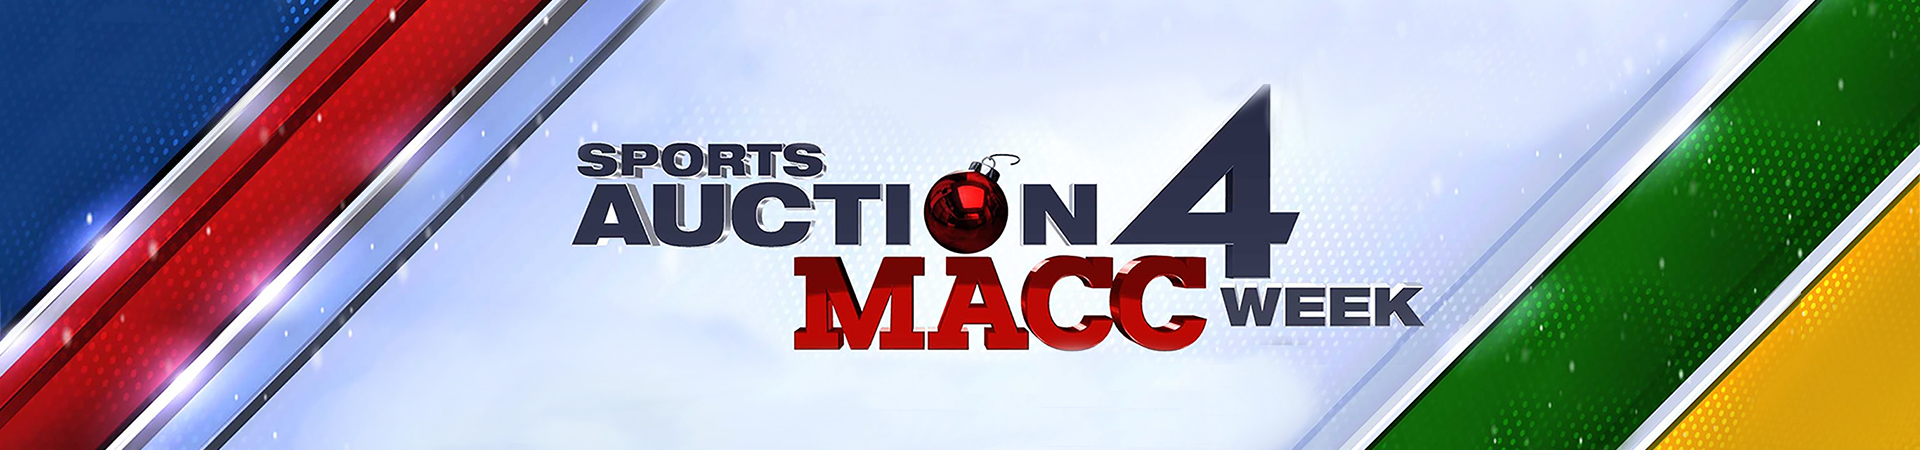 Sports Auction 4 MACC